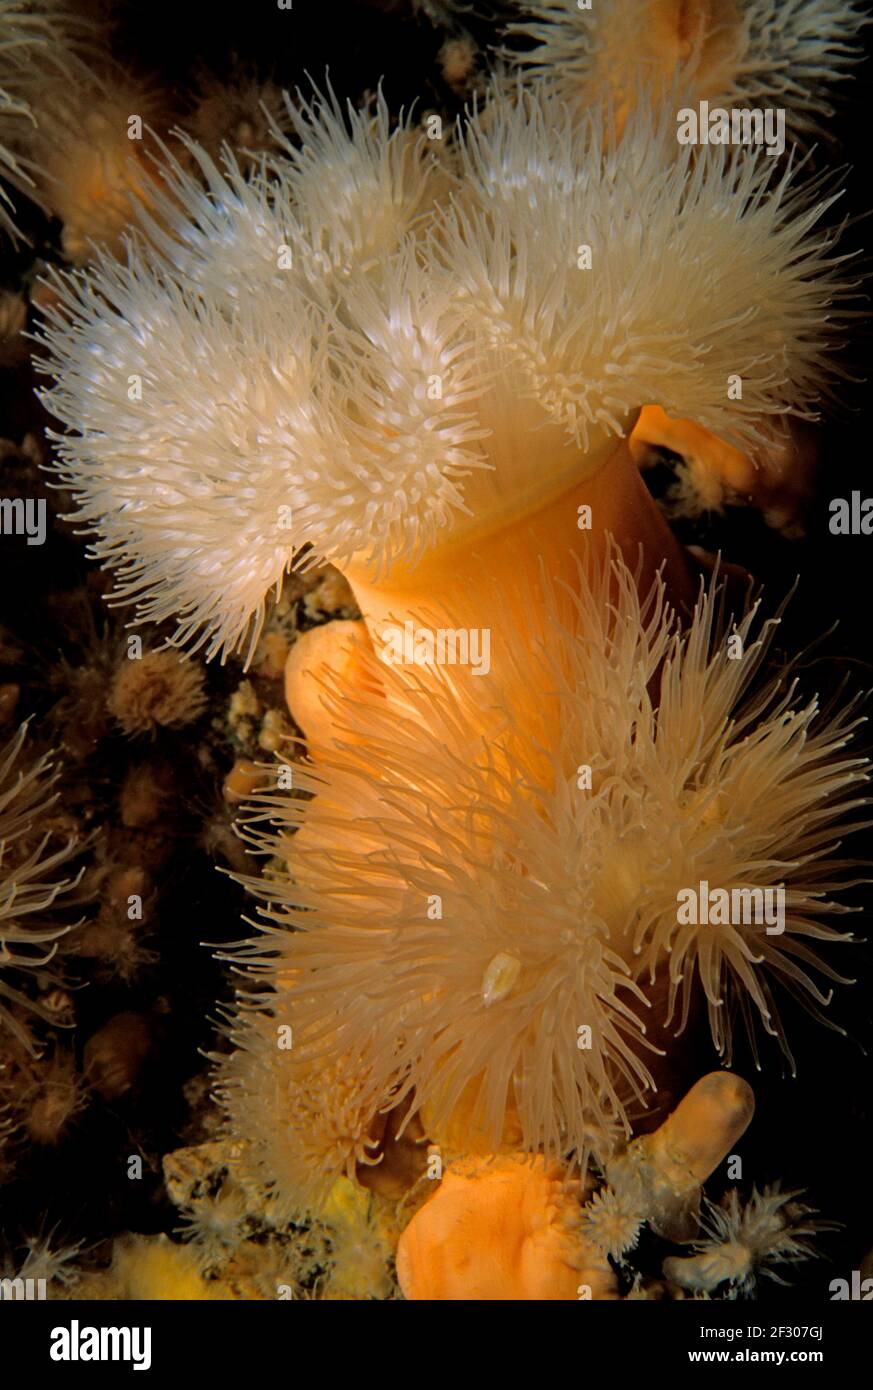 Plumose anemone (Metridium dianthus) with budded offspring, UK. Stock Photo